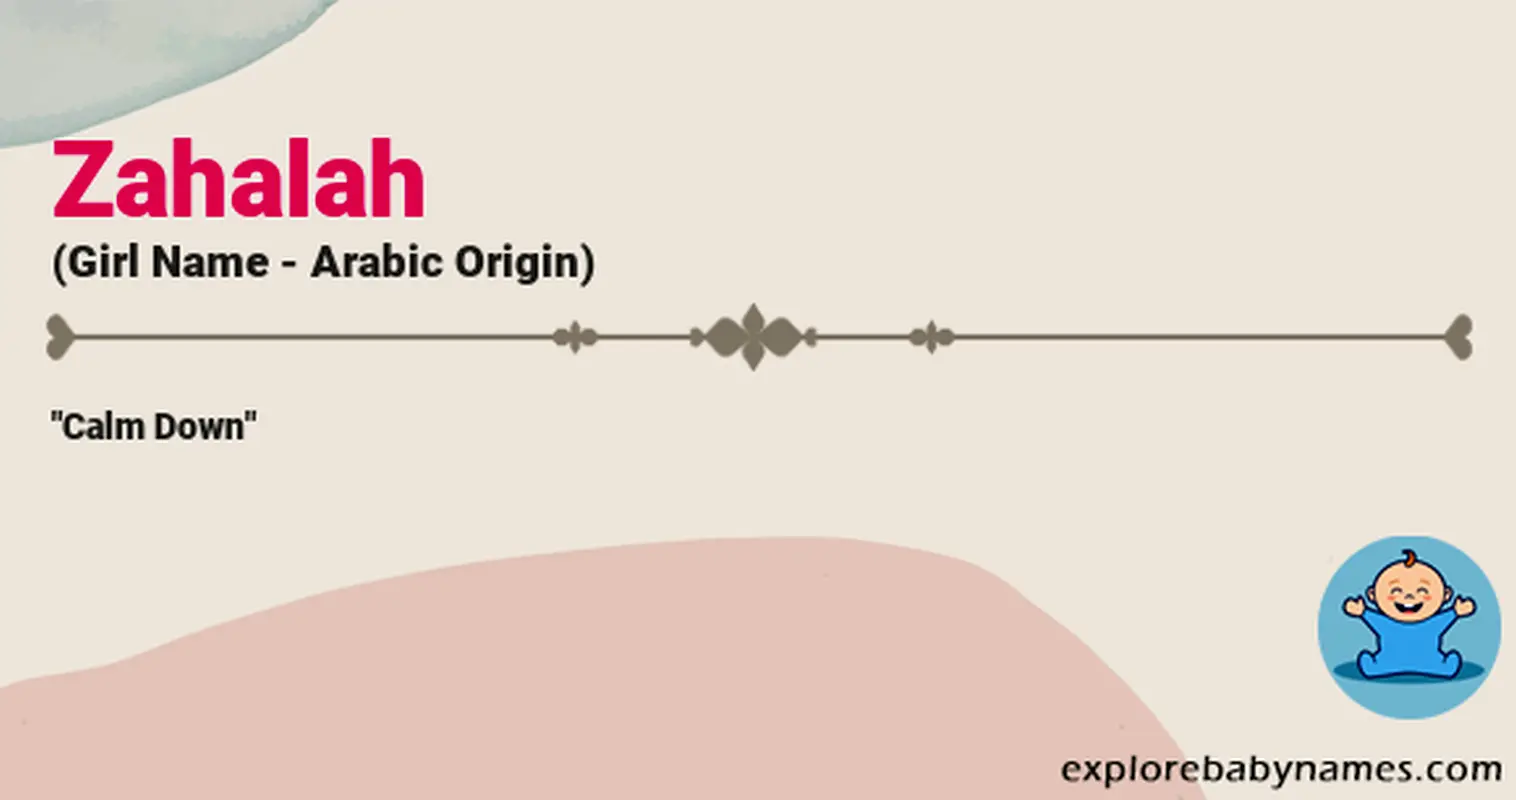 Meaning of Zahalah